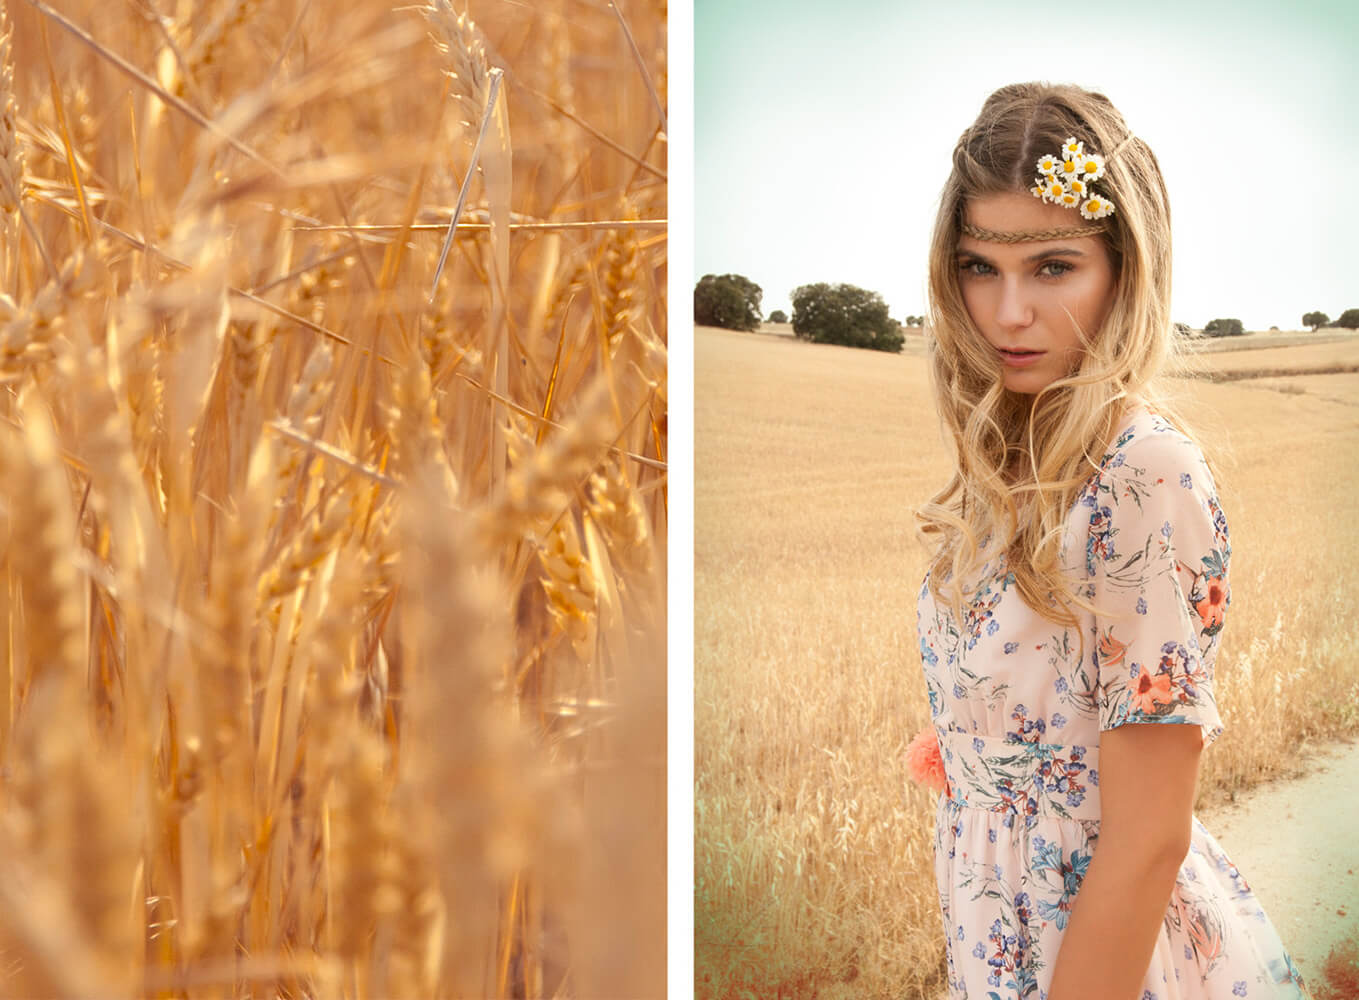 Angel-Ruiz-Ruiz-Fashion-Photographer-Campaign-SS-2015-Divina-Providencia-Hipster-Madrid-Flower-Printed-Dress-1359x1000